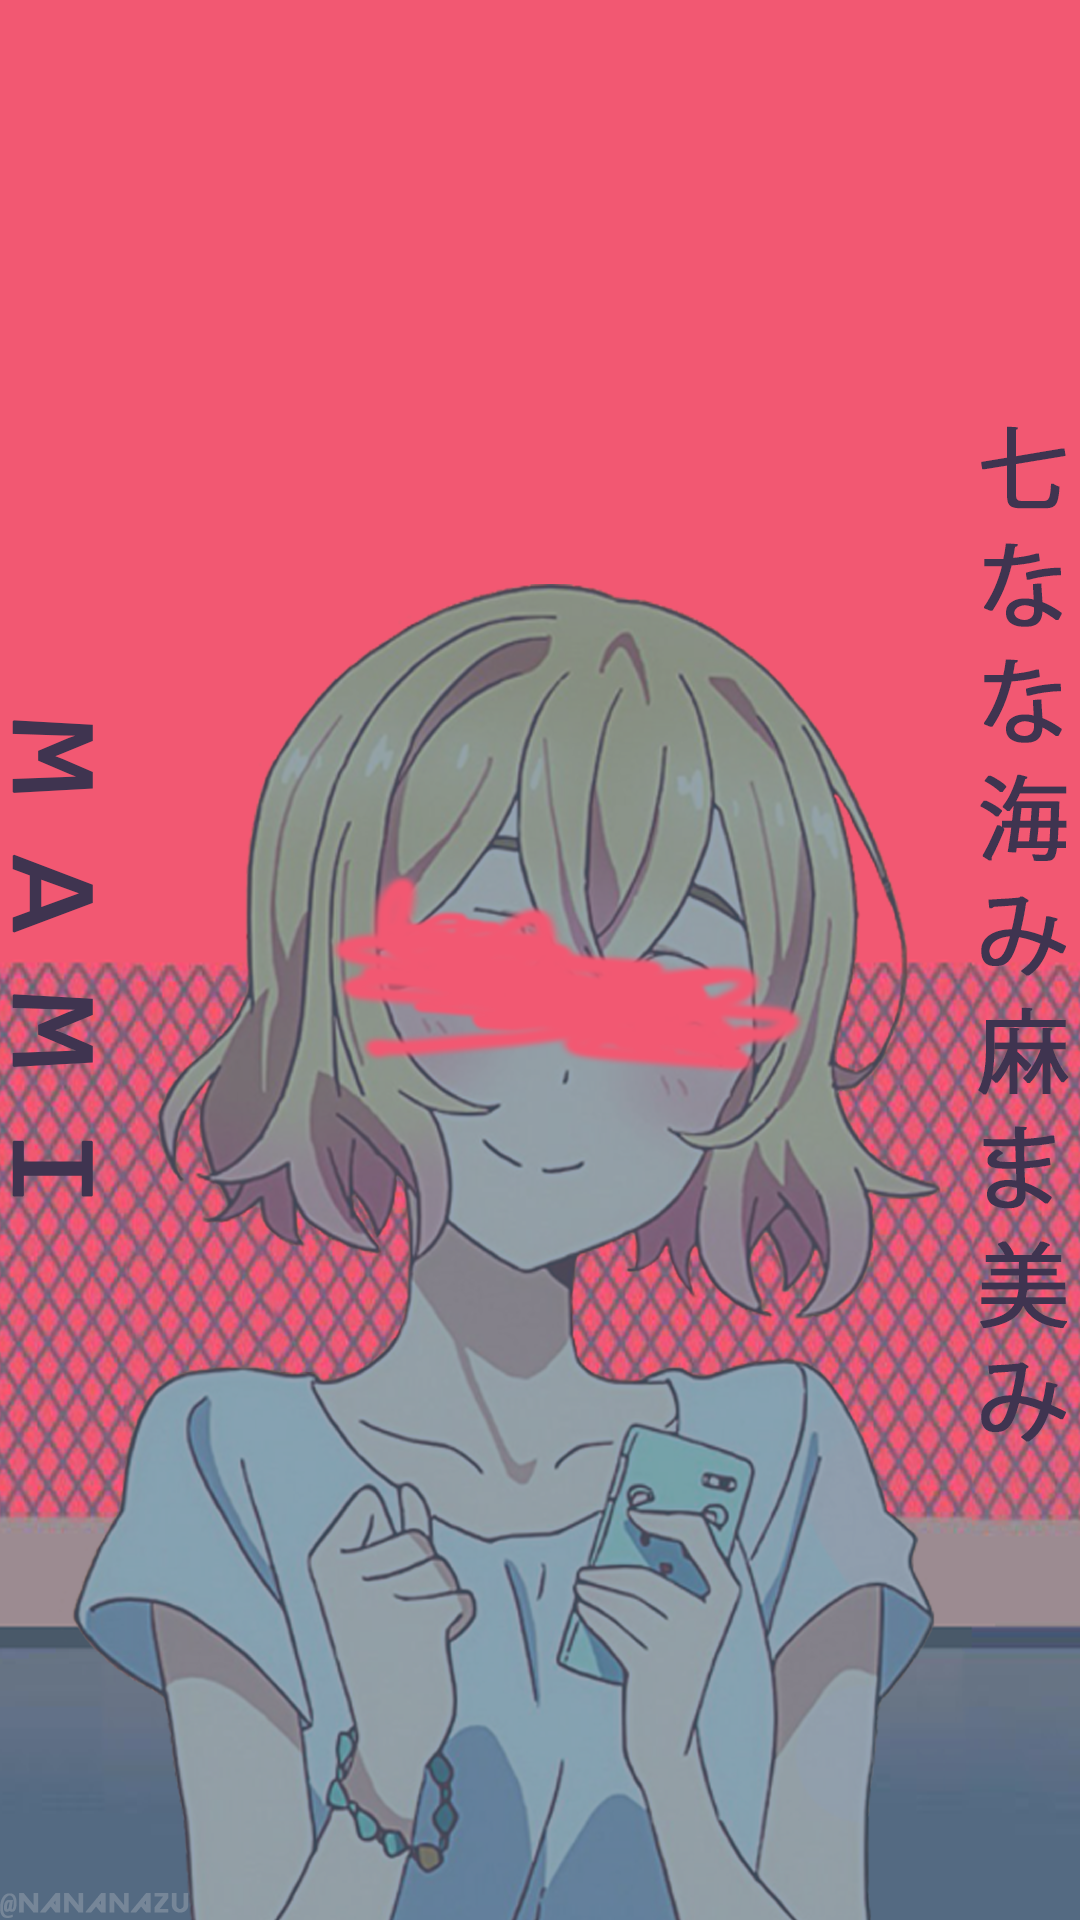 Nanami Mami Yoasobi Wallpaper Android. Anime chibi, Kawaii anime, Thicc anime